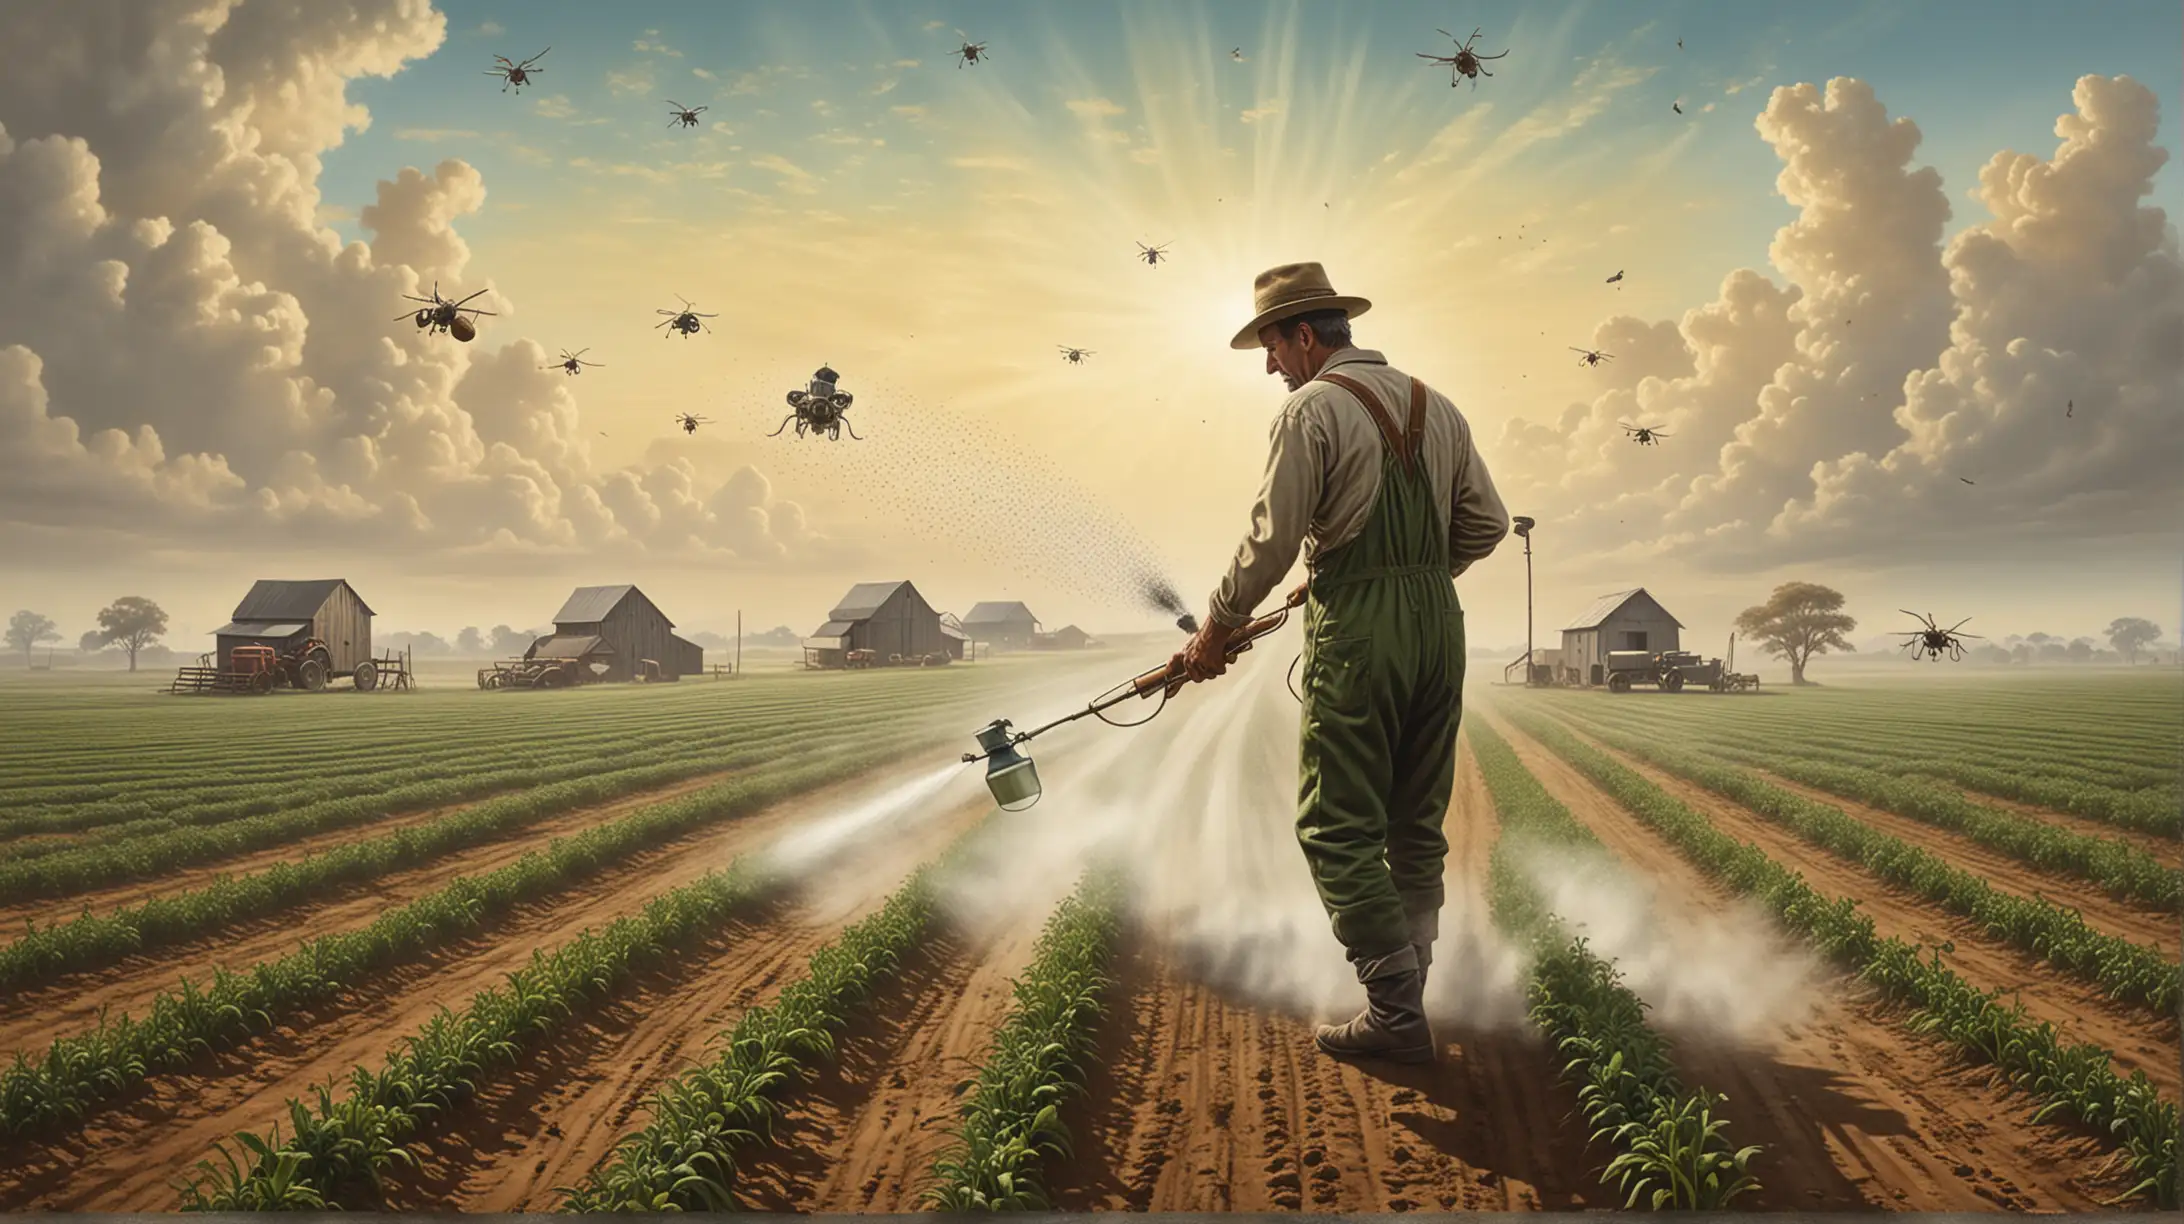 Surrealist Farmer Spraying Pesticides in Dreamlike Landscape